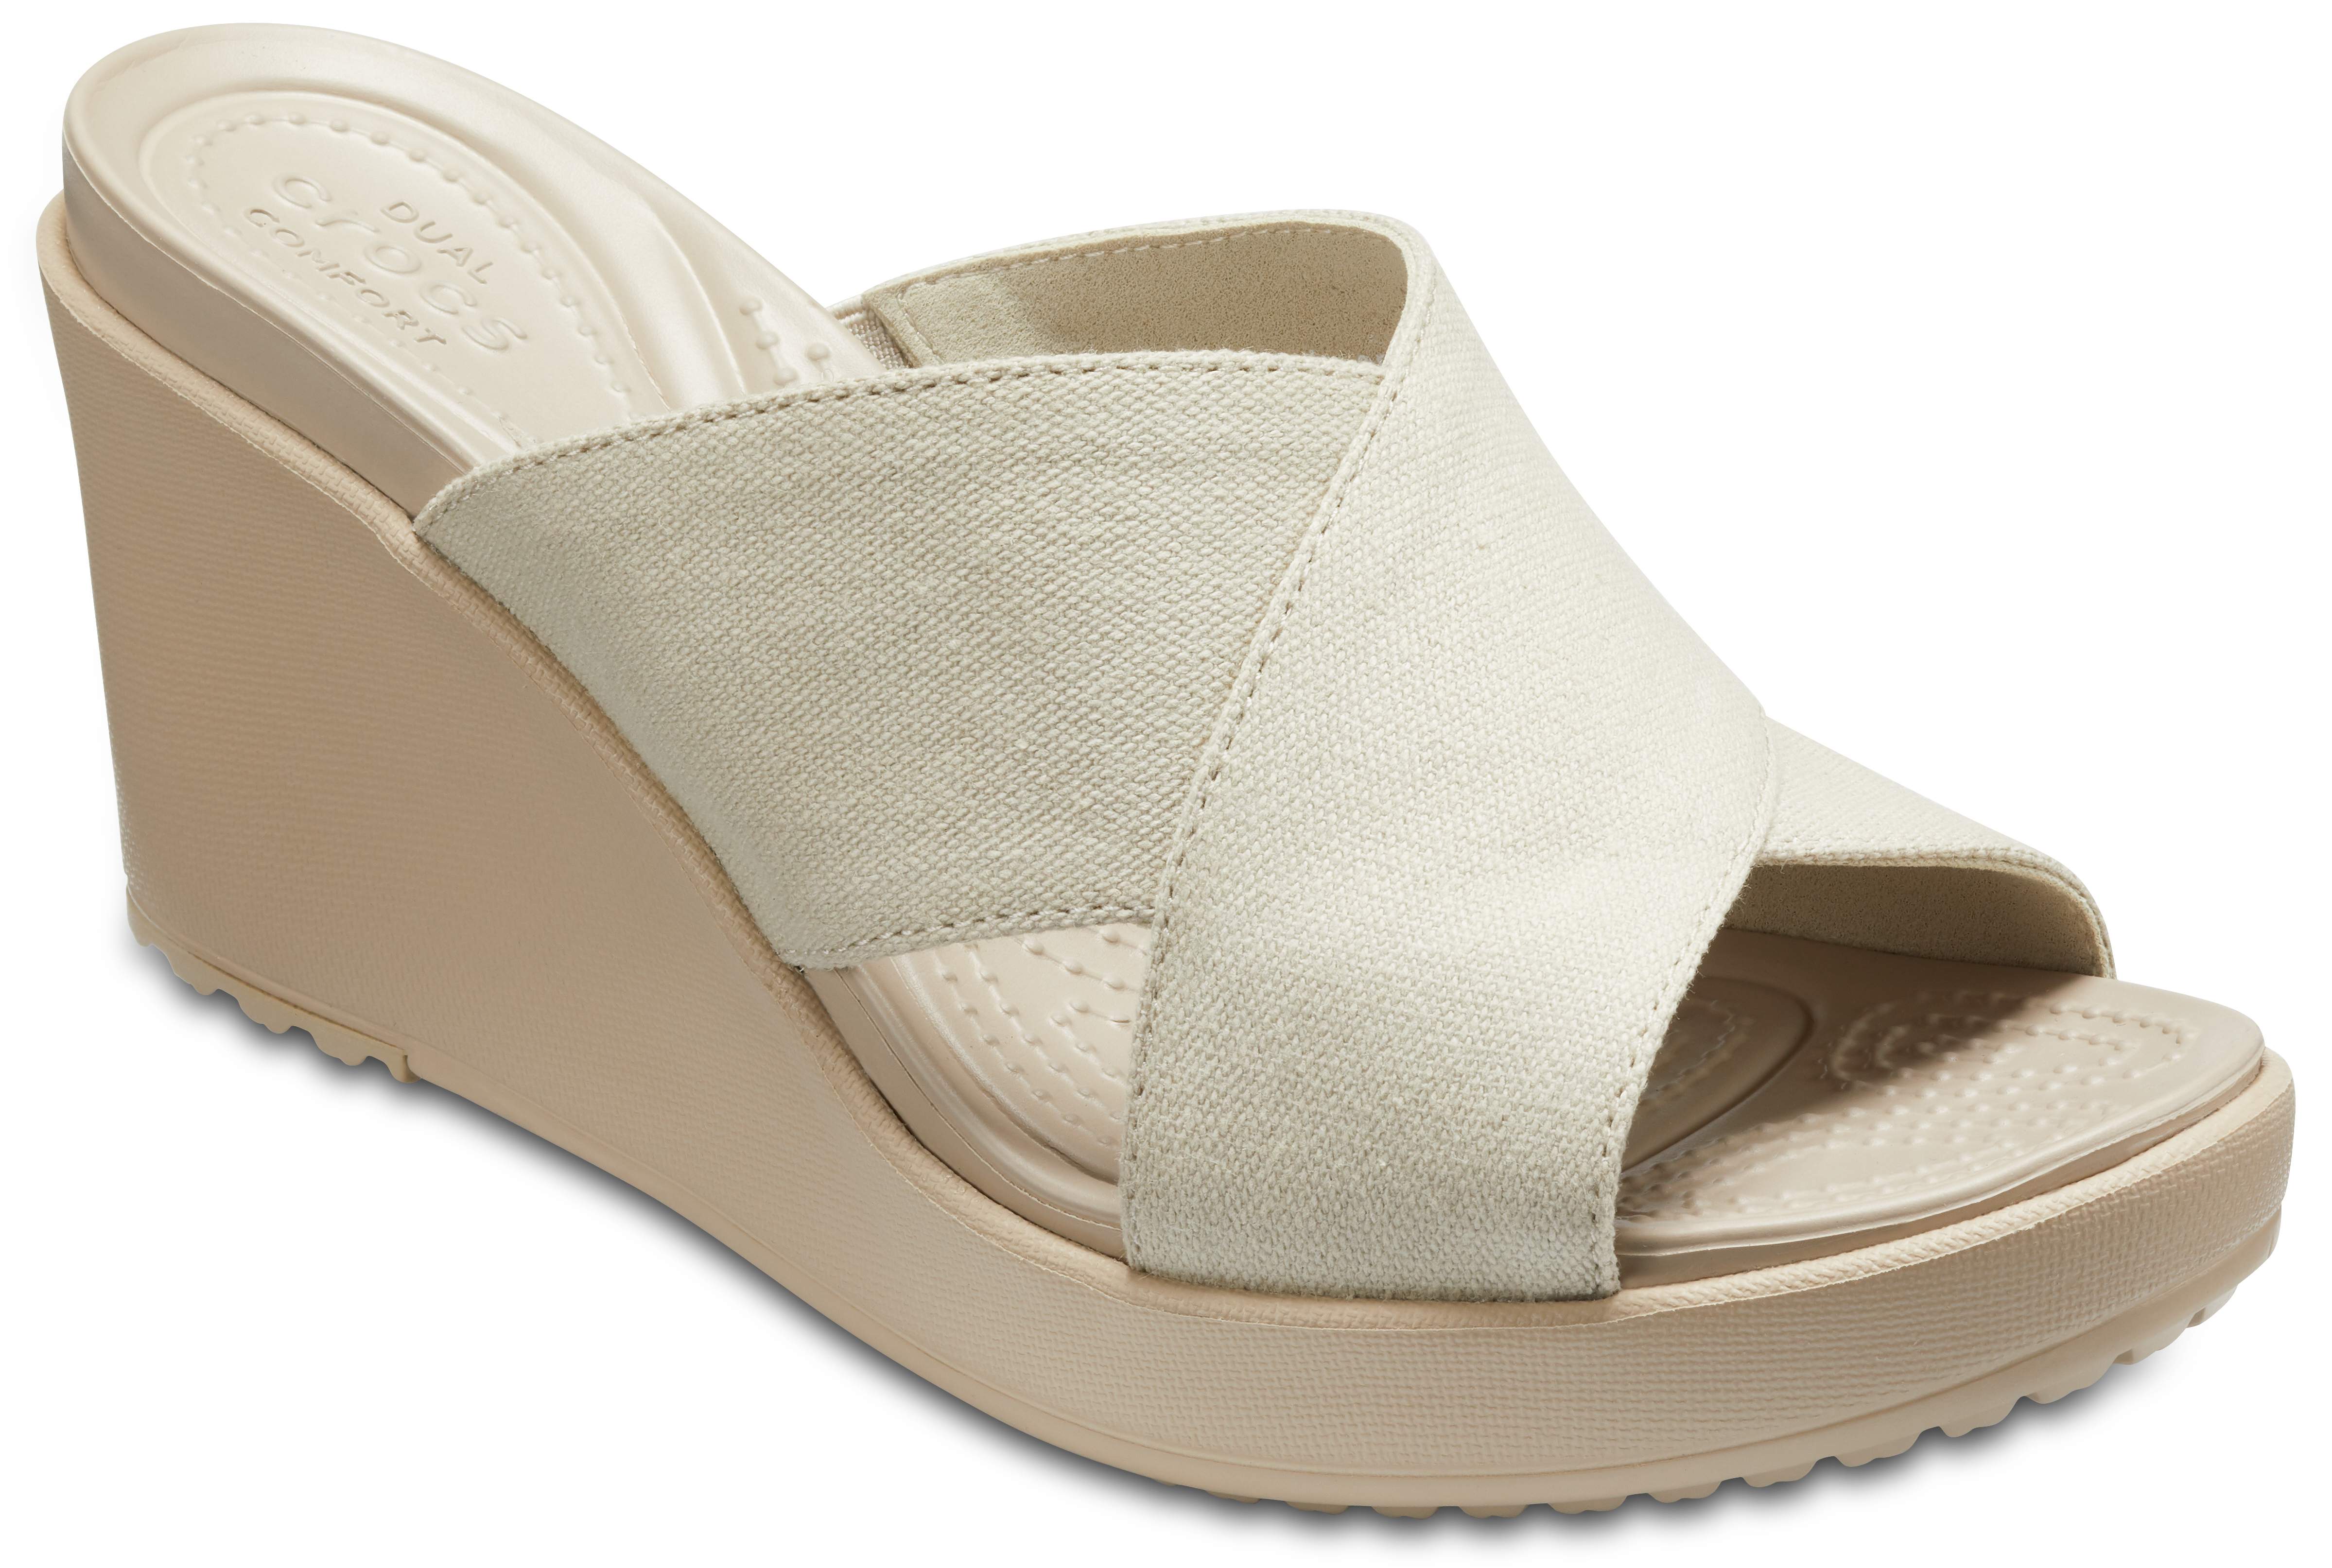 crocs leigh 2 women's wedge sandals